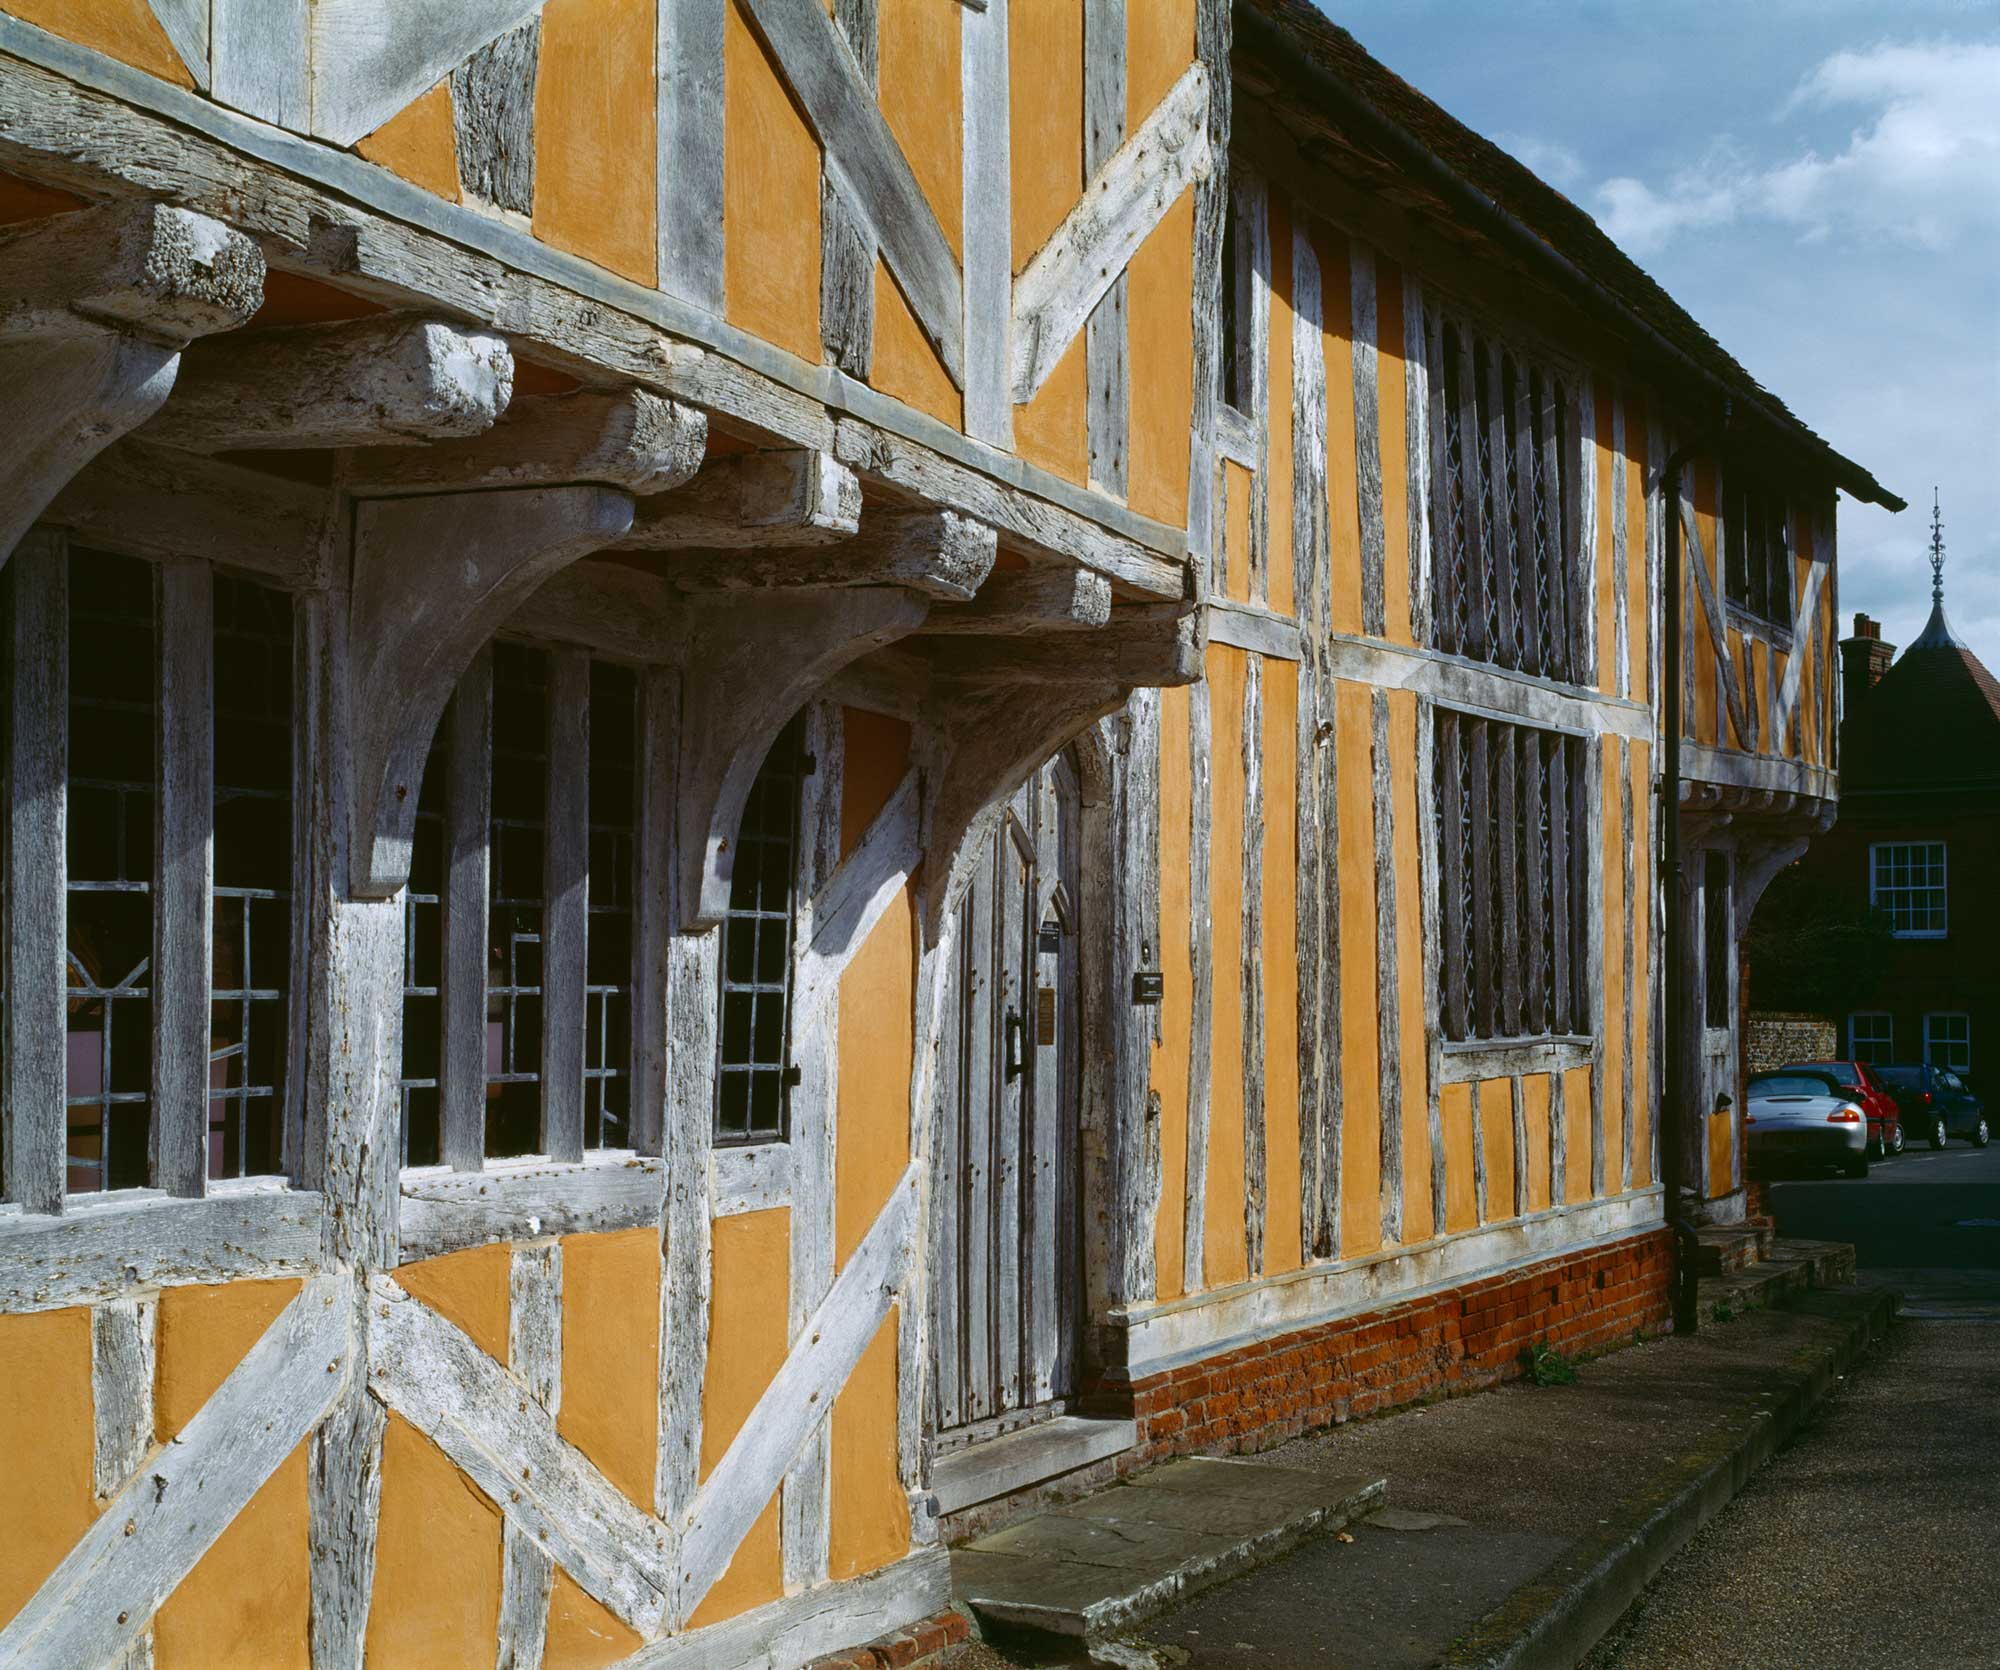 A historic building in Lavenham village, Suffolk